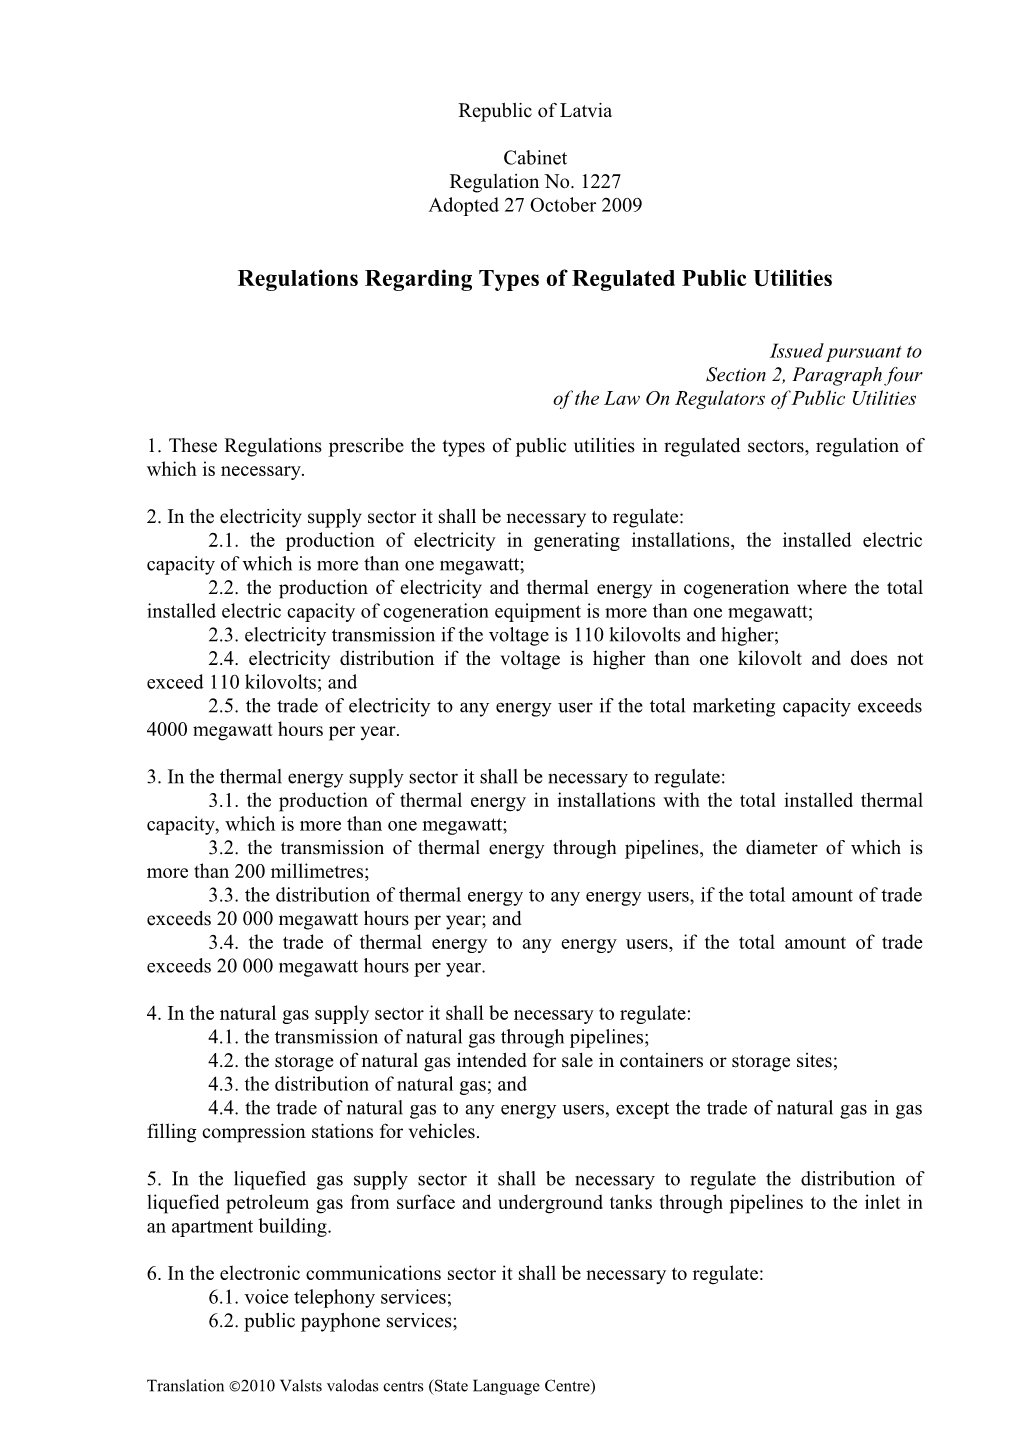 Regulations Regarding Types of Regulated Public Utilities